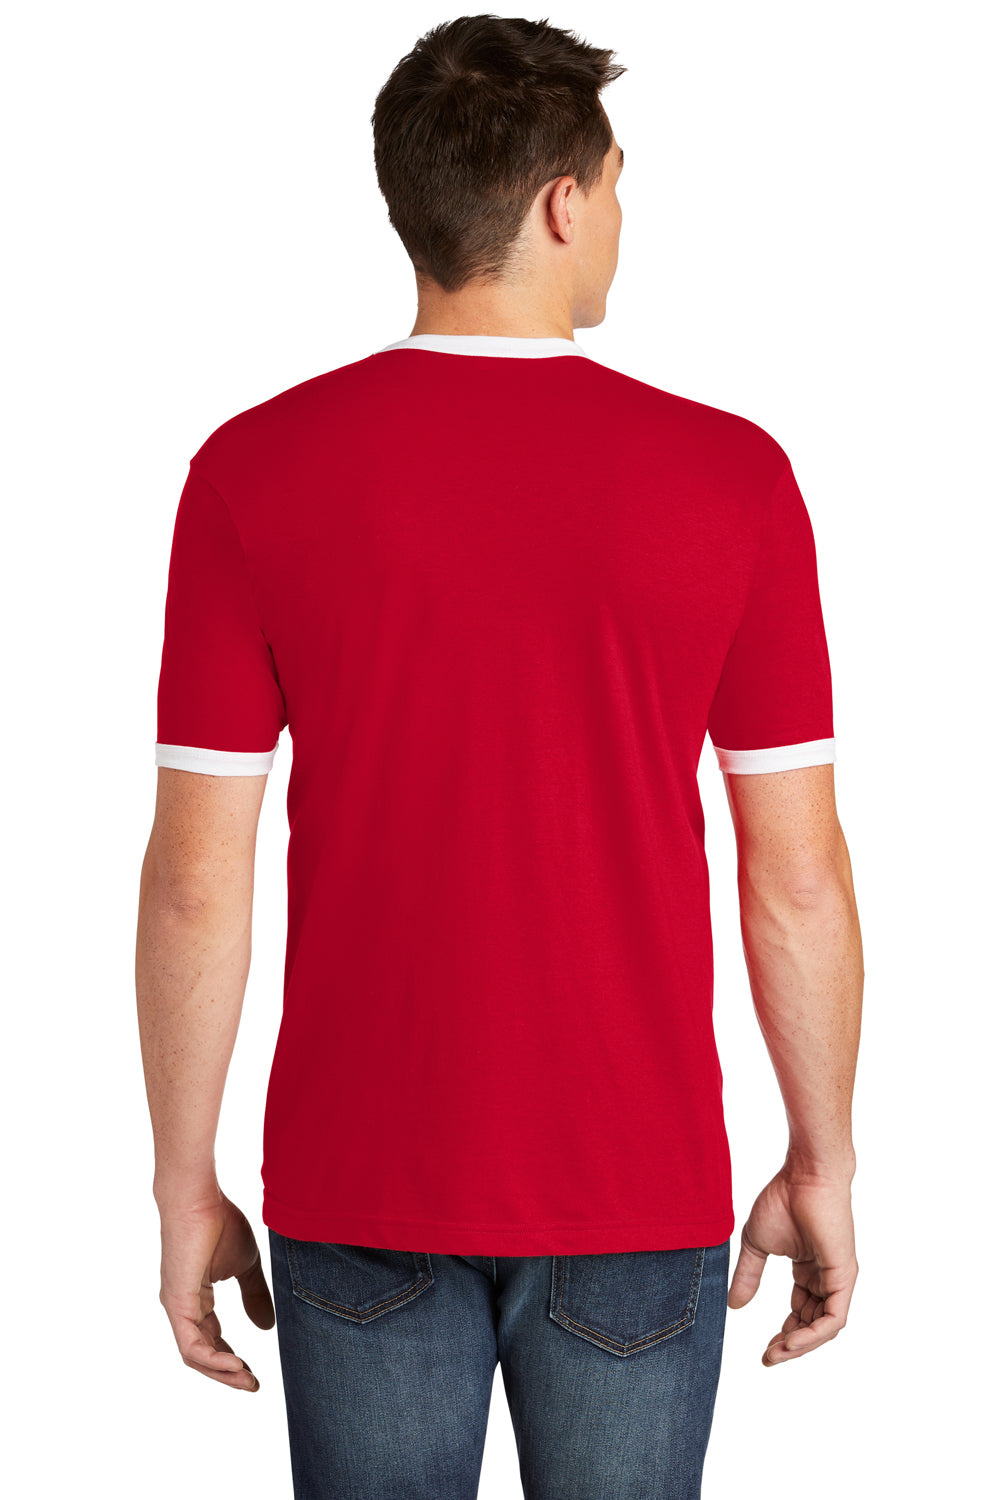 American Apparel 2410W Mens Fine Jersey Short Sleeve Crewneck T-Shirt Red Back